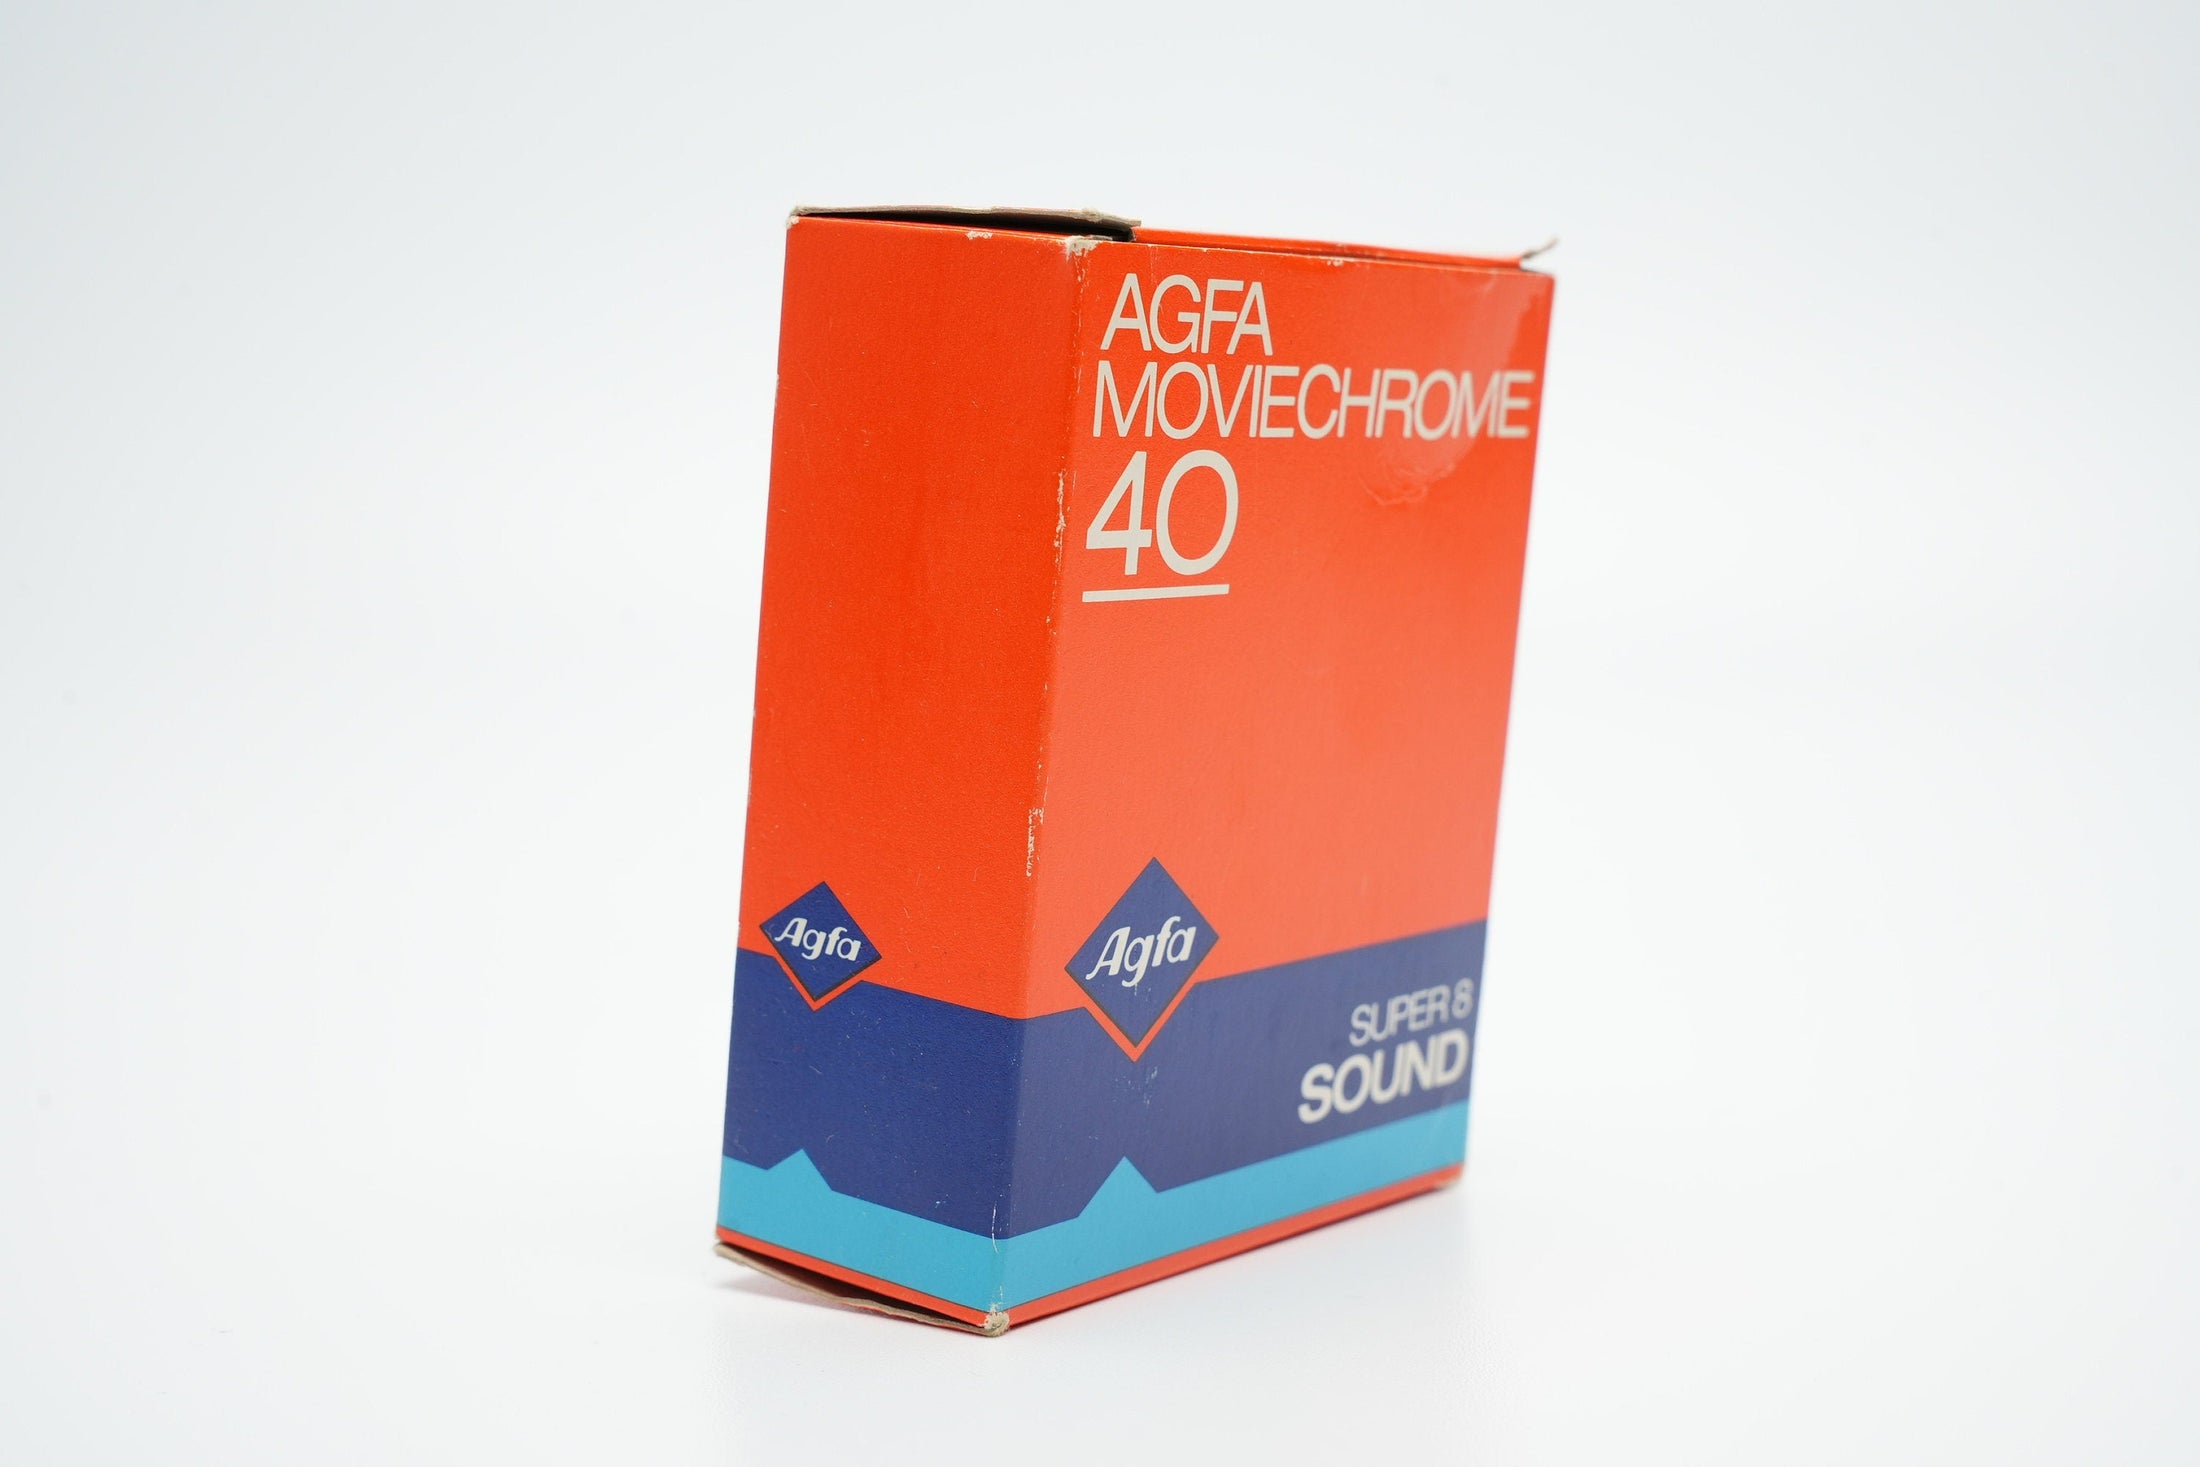 Agfa Moviechrome 40 SOUND super 8